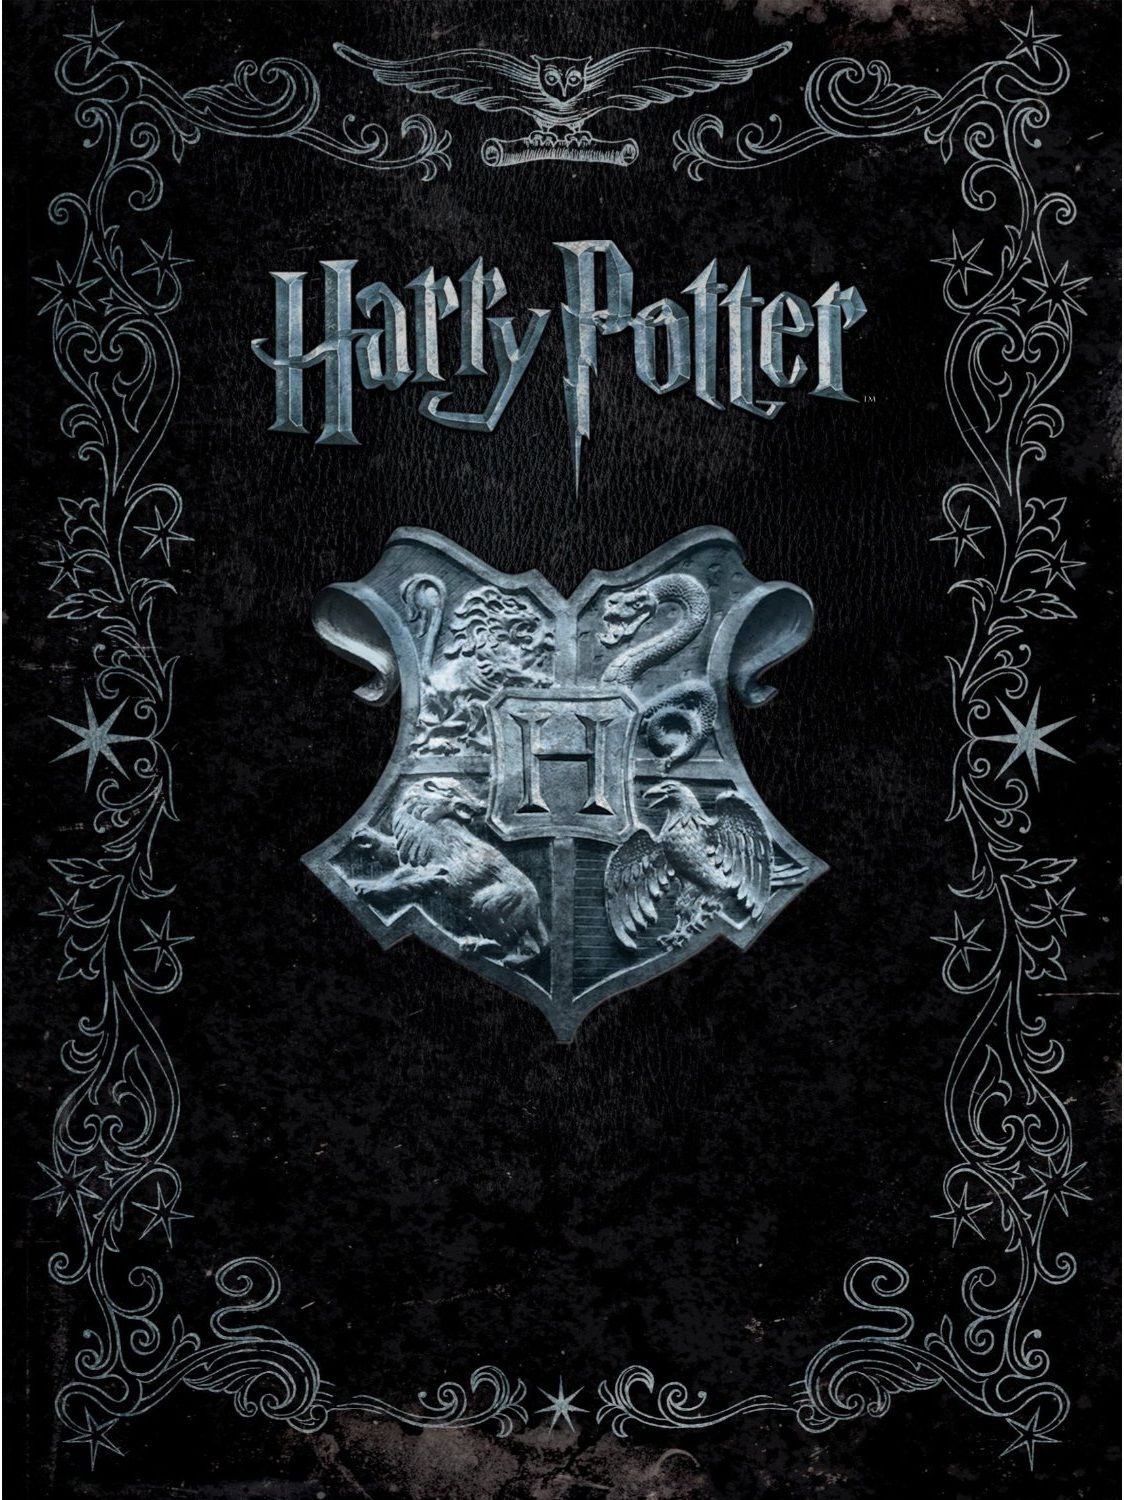 Harrypotter-cover-idea.jpg